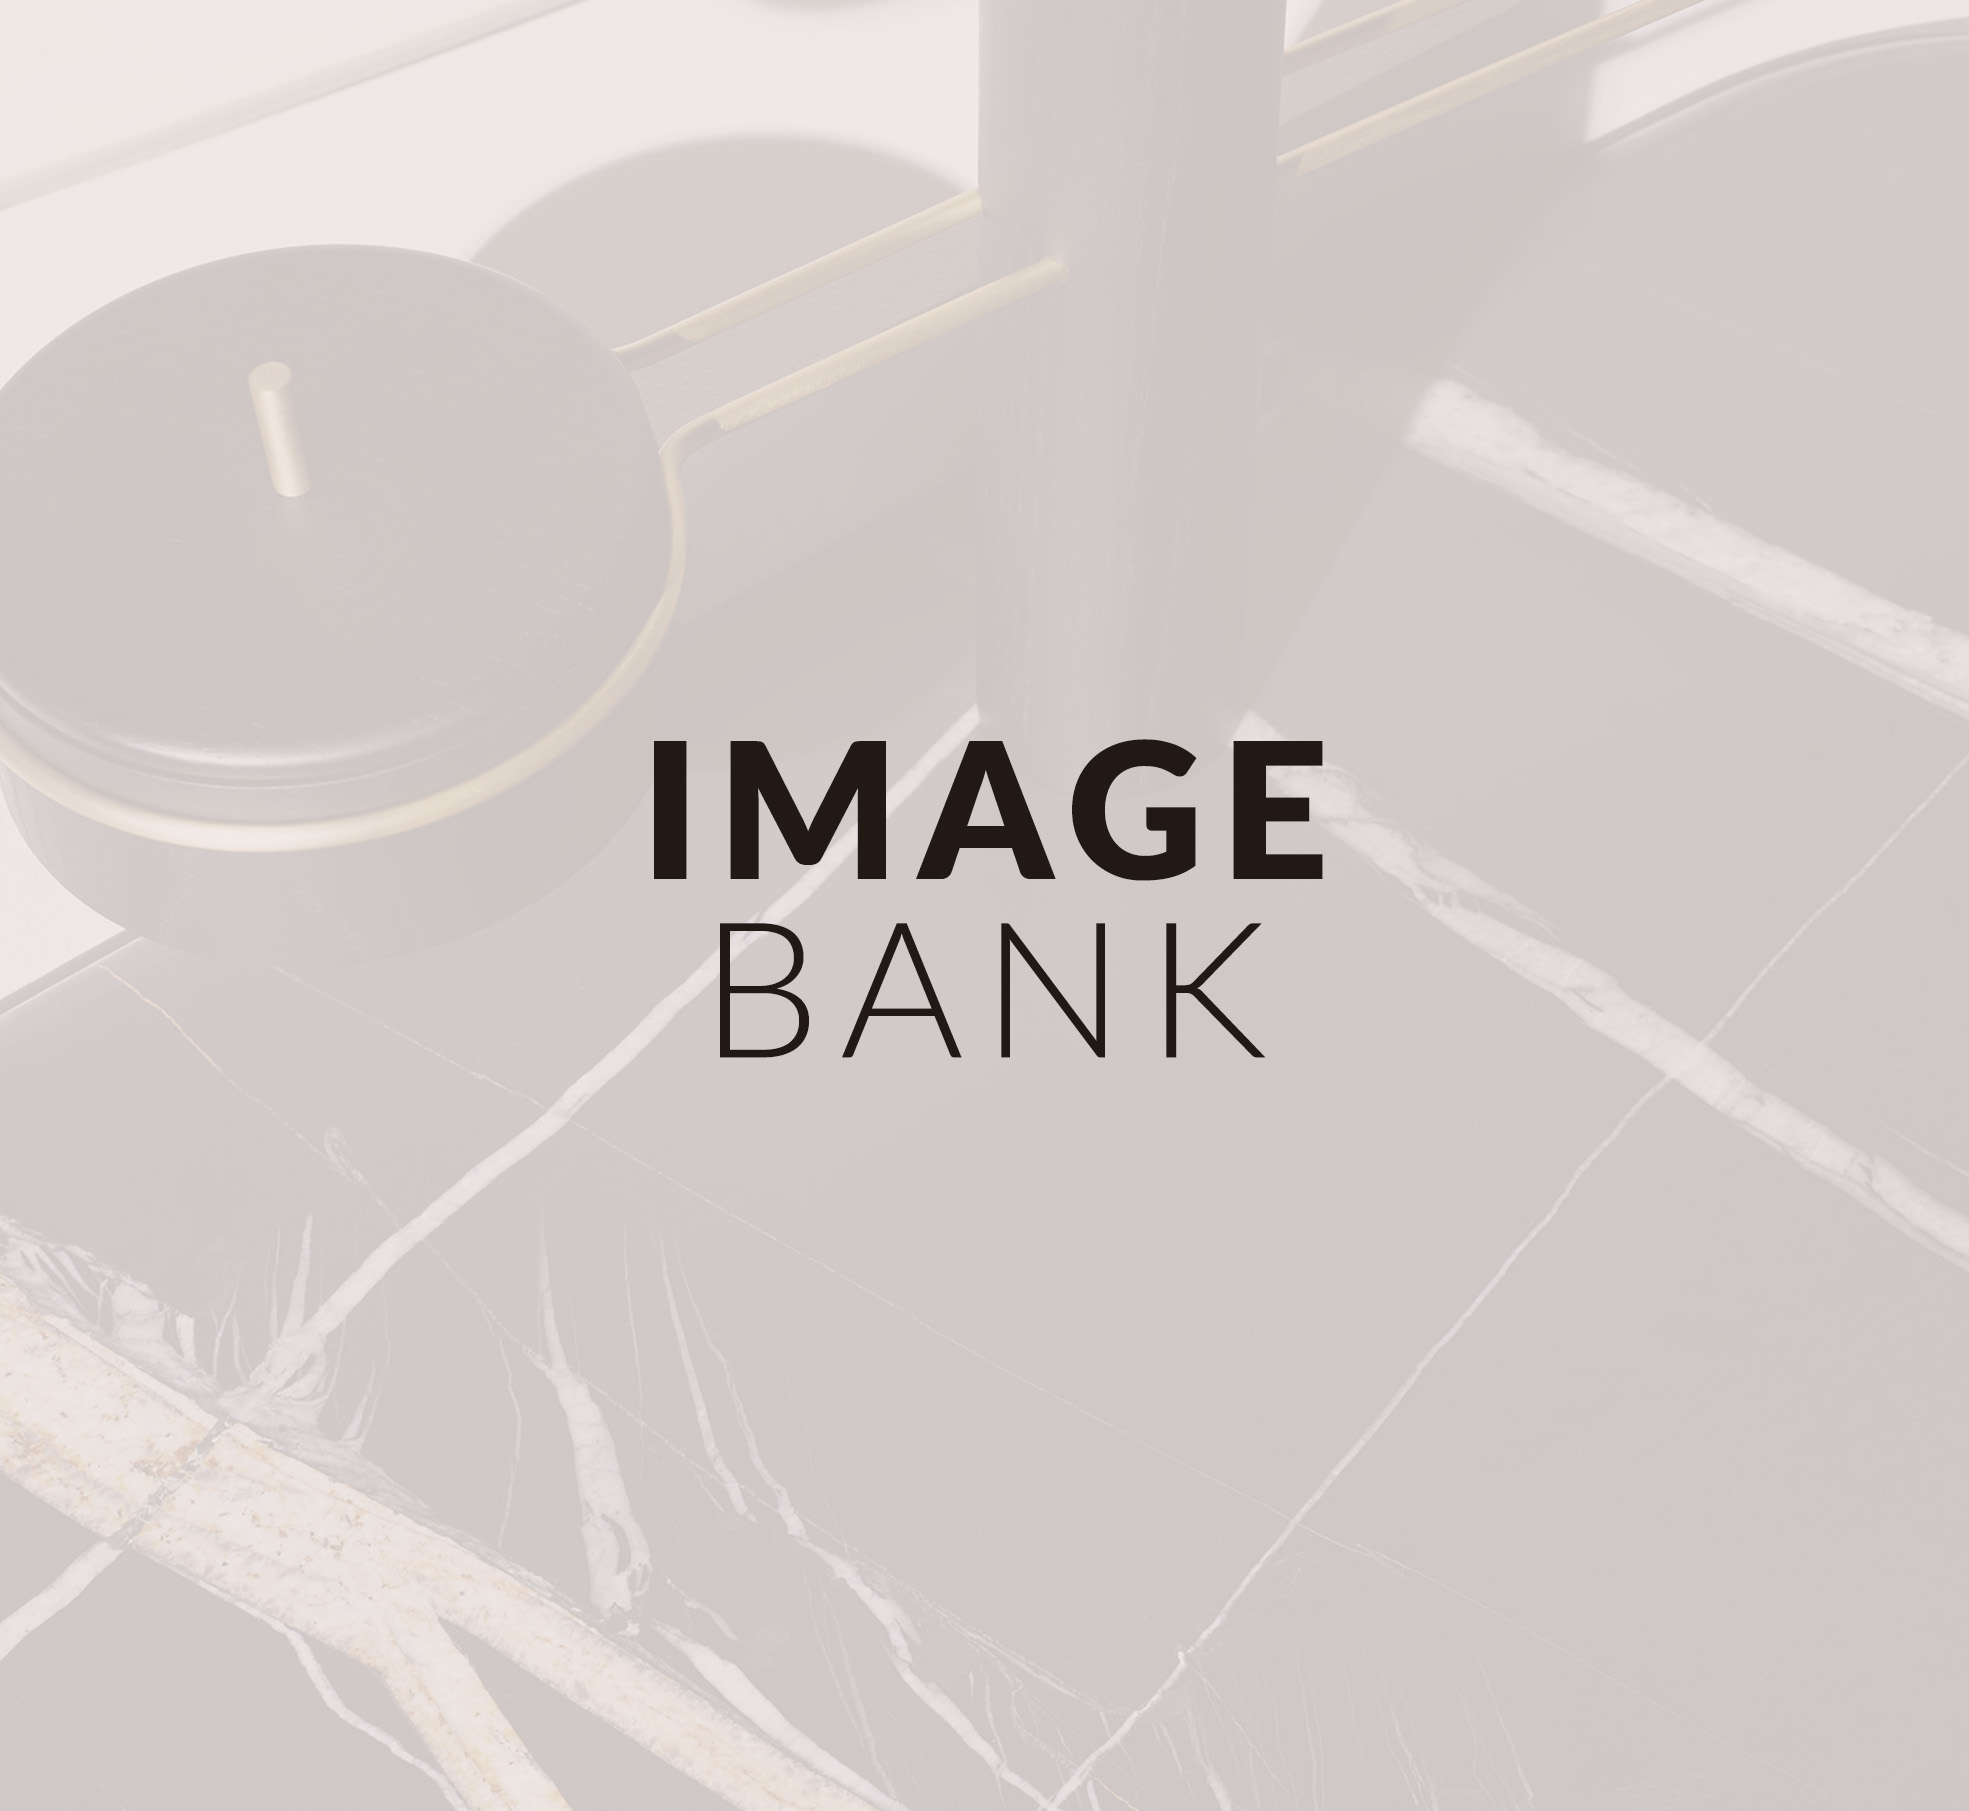 image-bank-nomon-home-2020